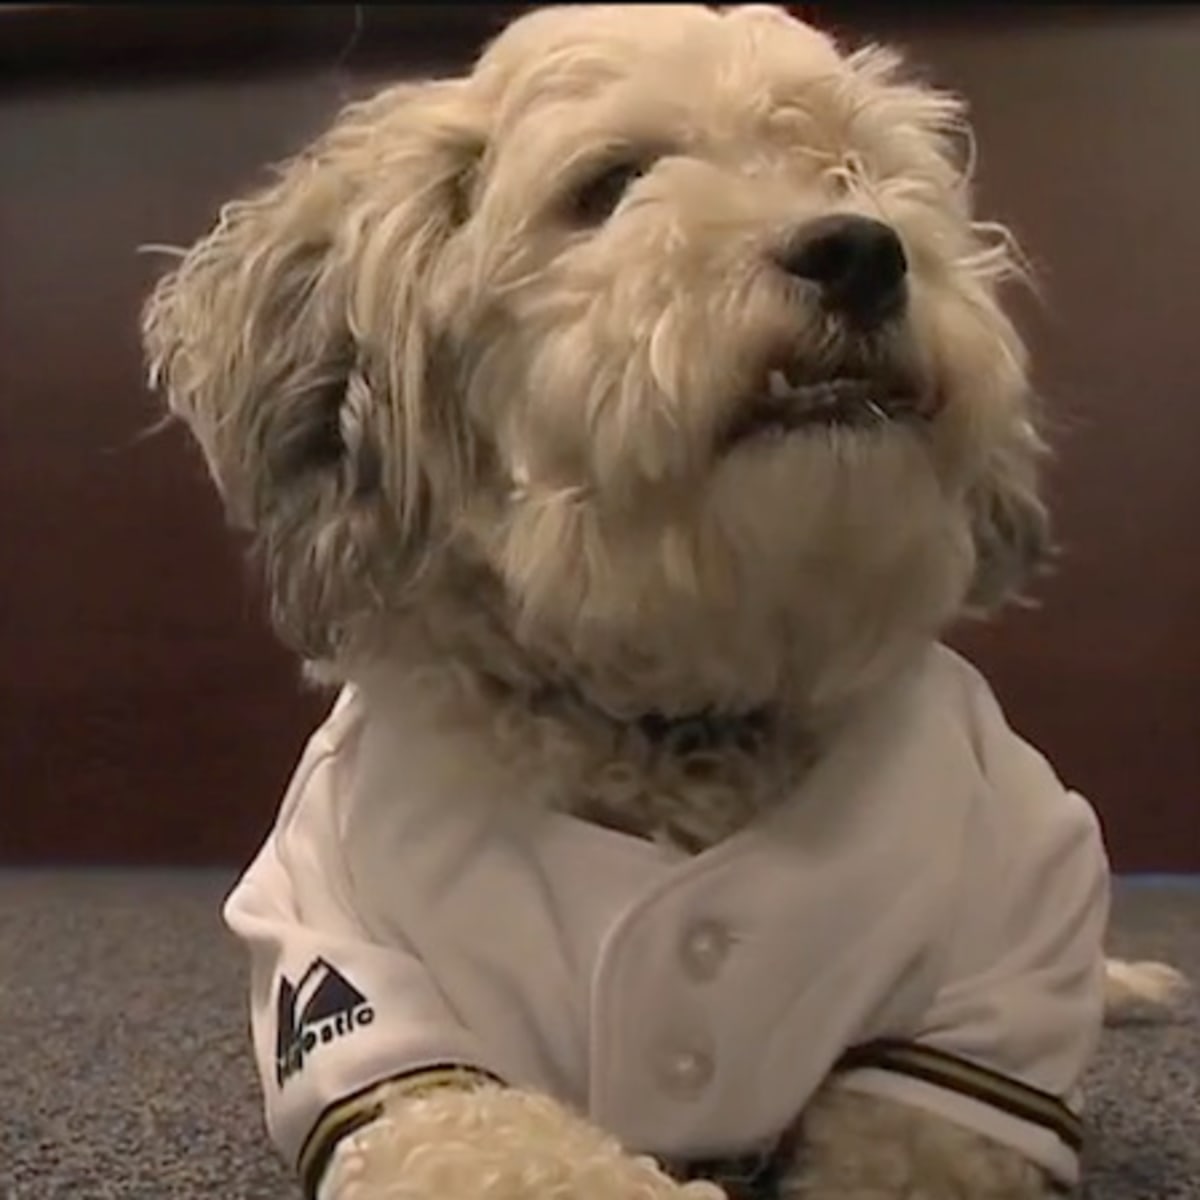 Hank the Ballpark Pup